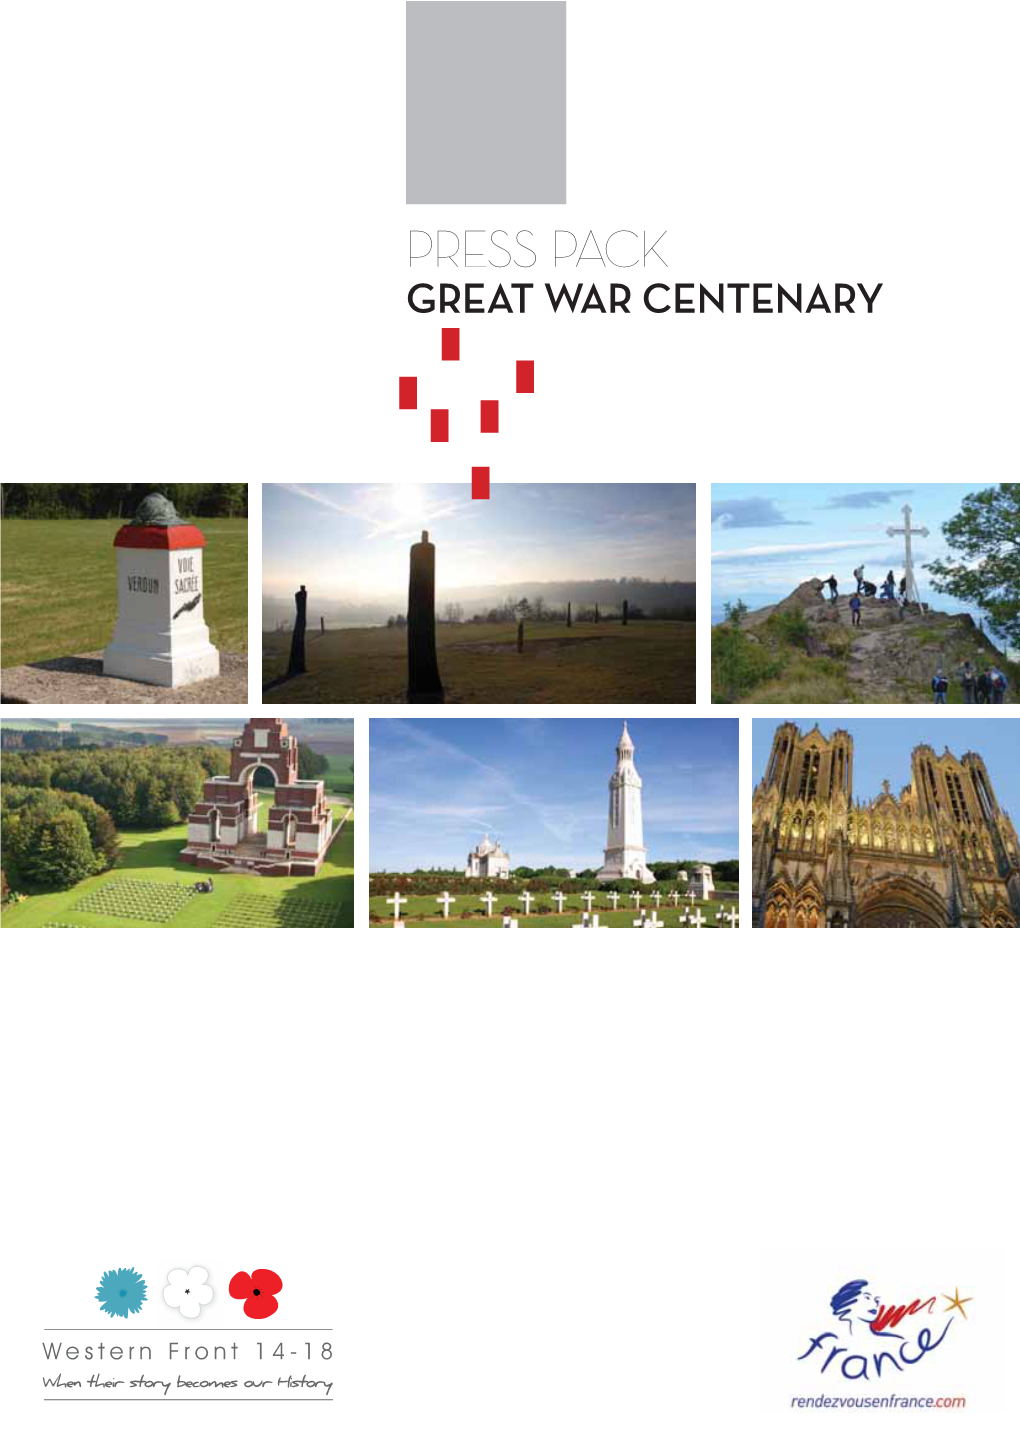 PRESS PACK GREAT WAR CENTENARY Vimy Canadian Memorial